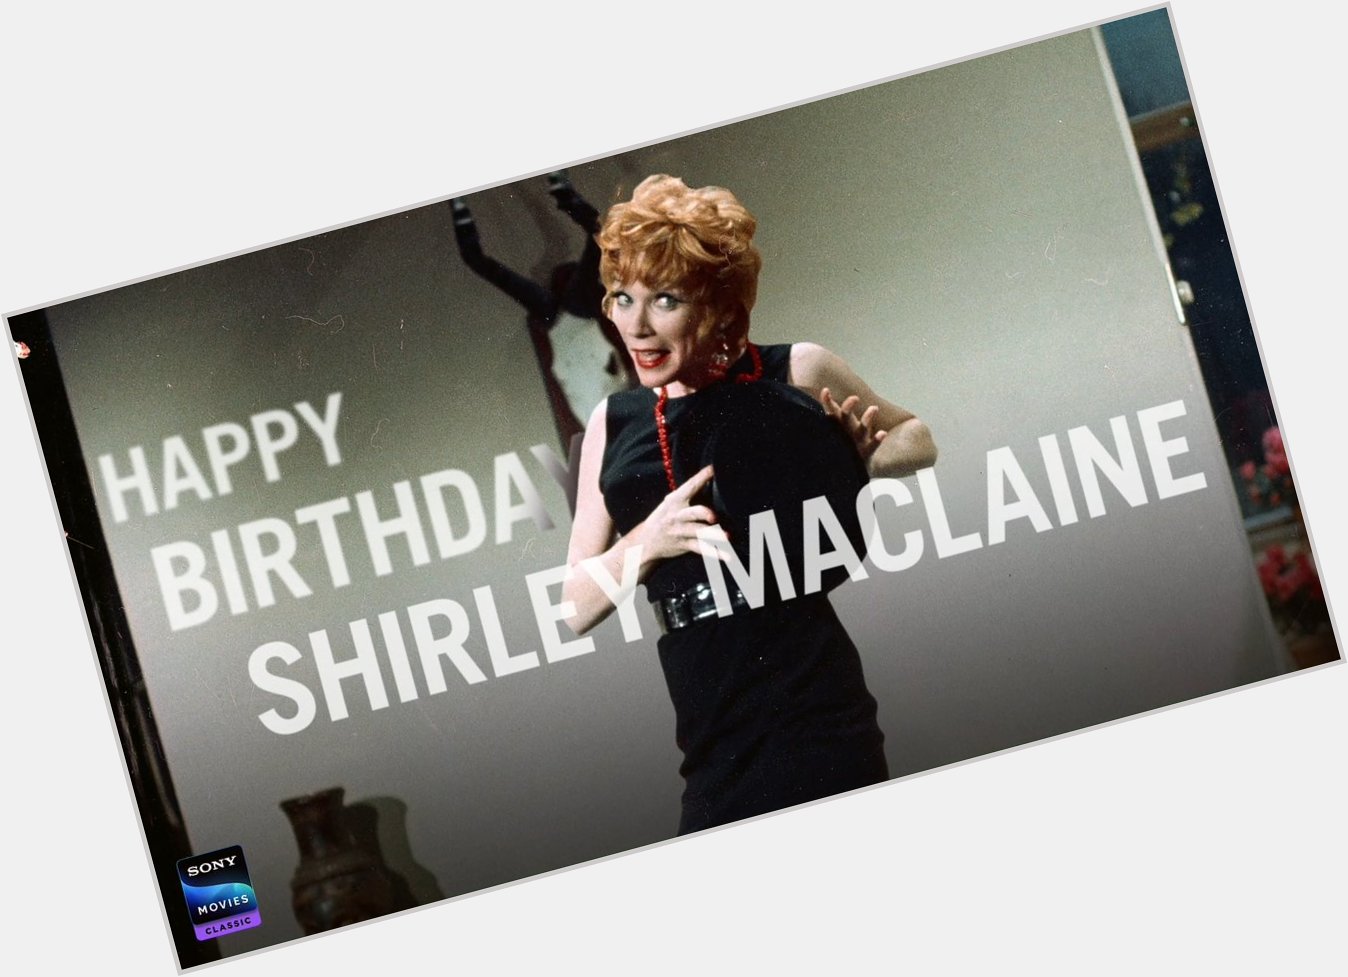   Oscars  Golden Globes  Emmys  BAFTAs

Happy birthday to a true powerhouse, Shirley MacLaine 